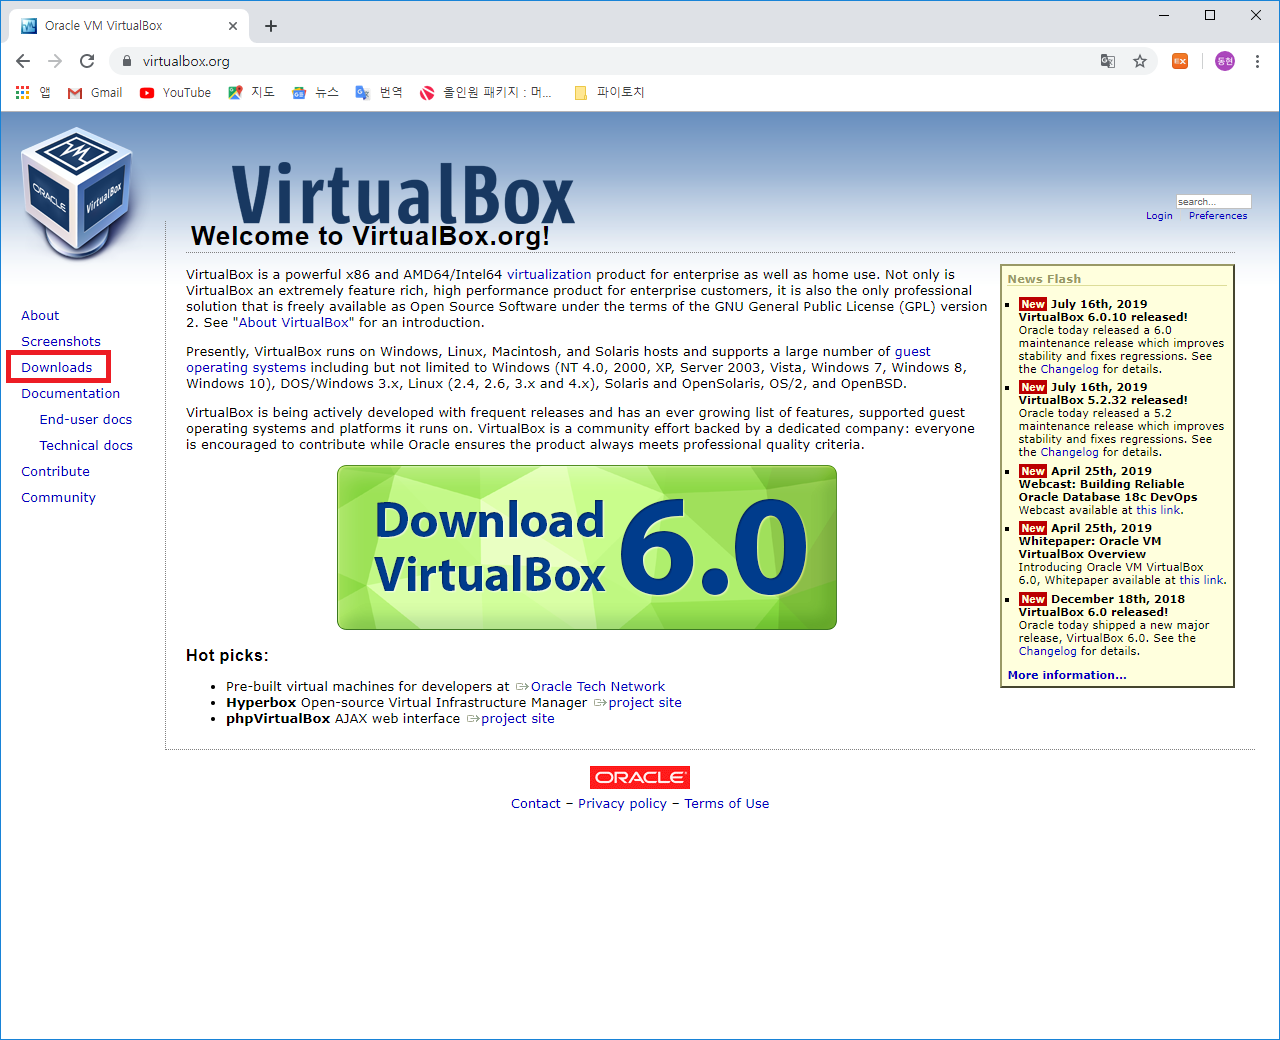 oracle vm virtualbox extension pack download windows